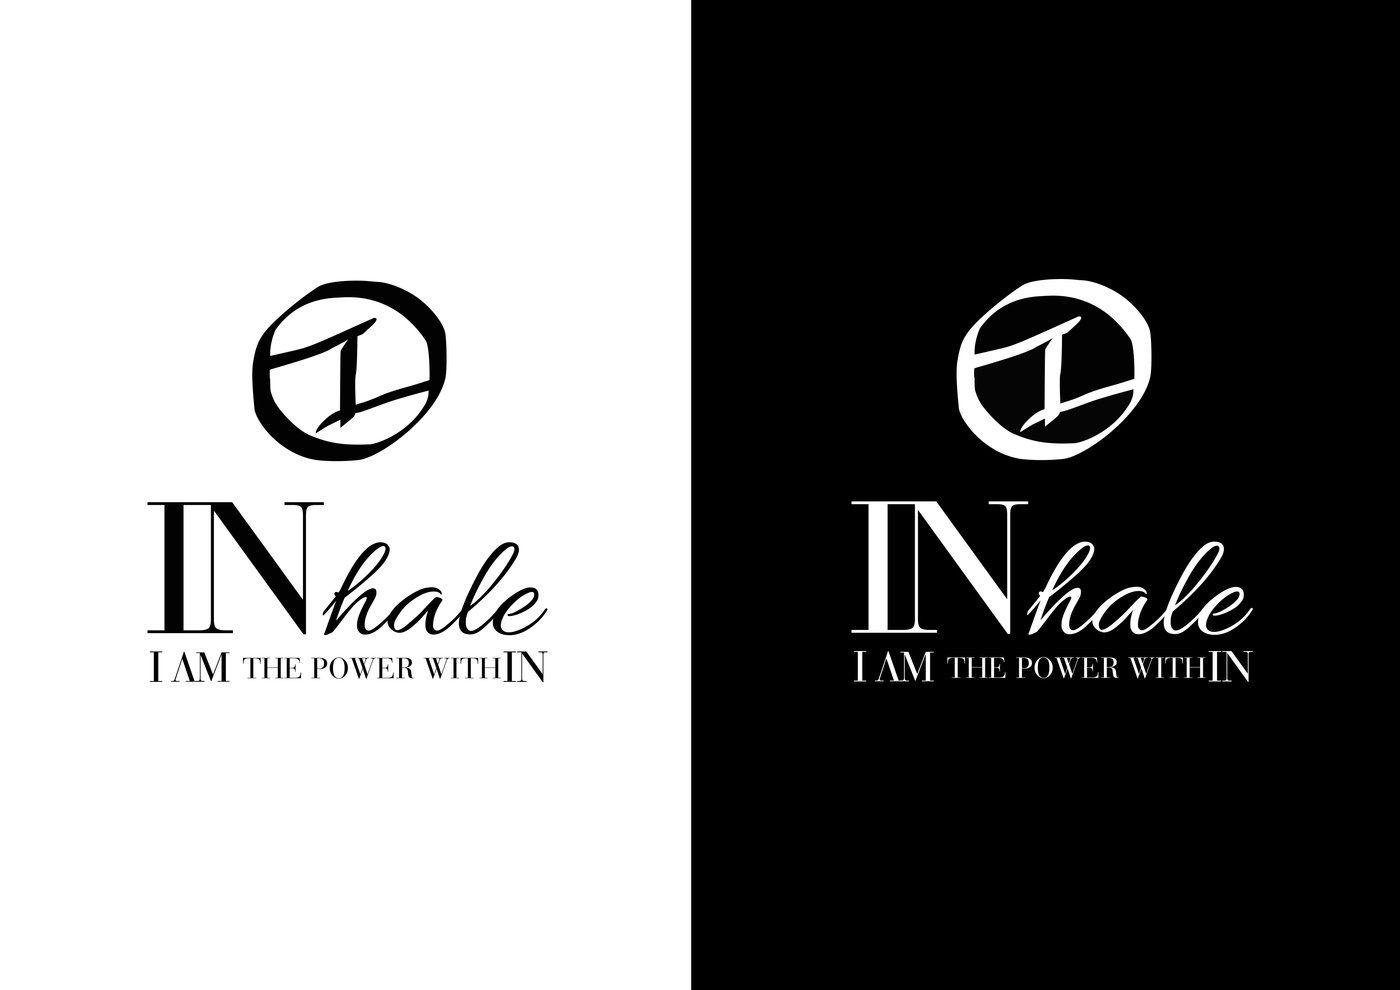 Inhale Logo - Inhale Studio Branding by Namrata Uchil at Coroflot.com